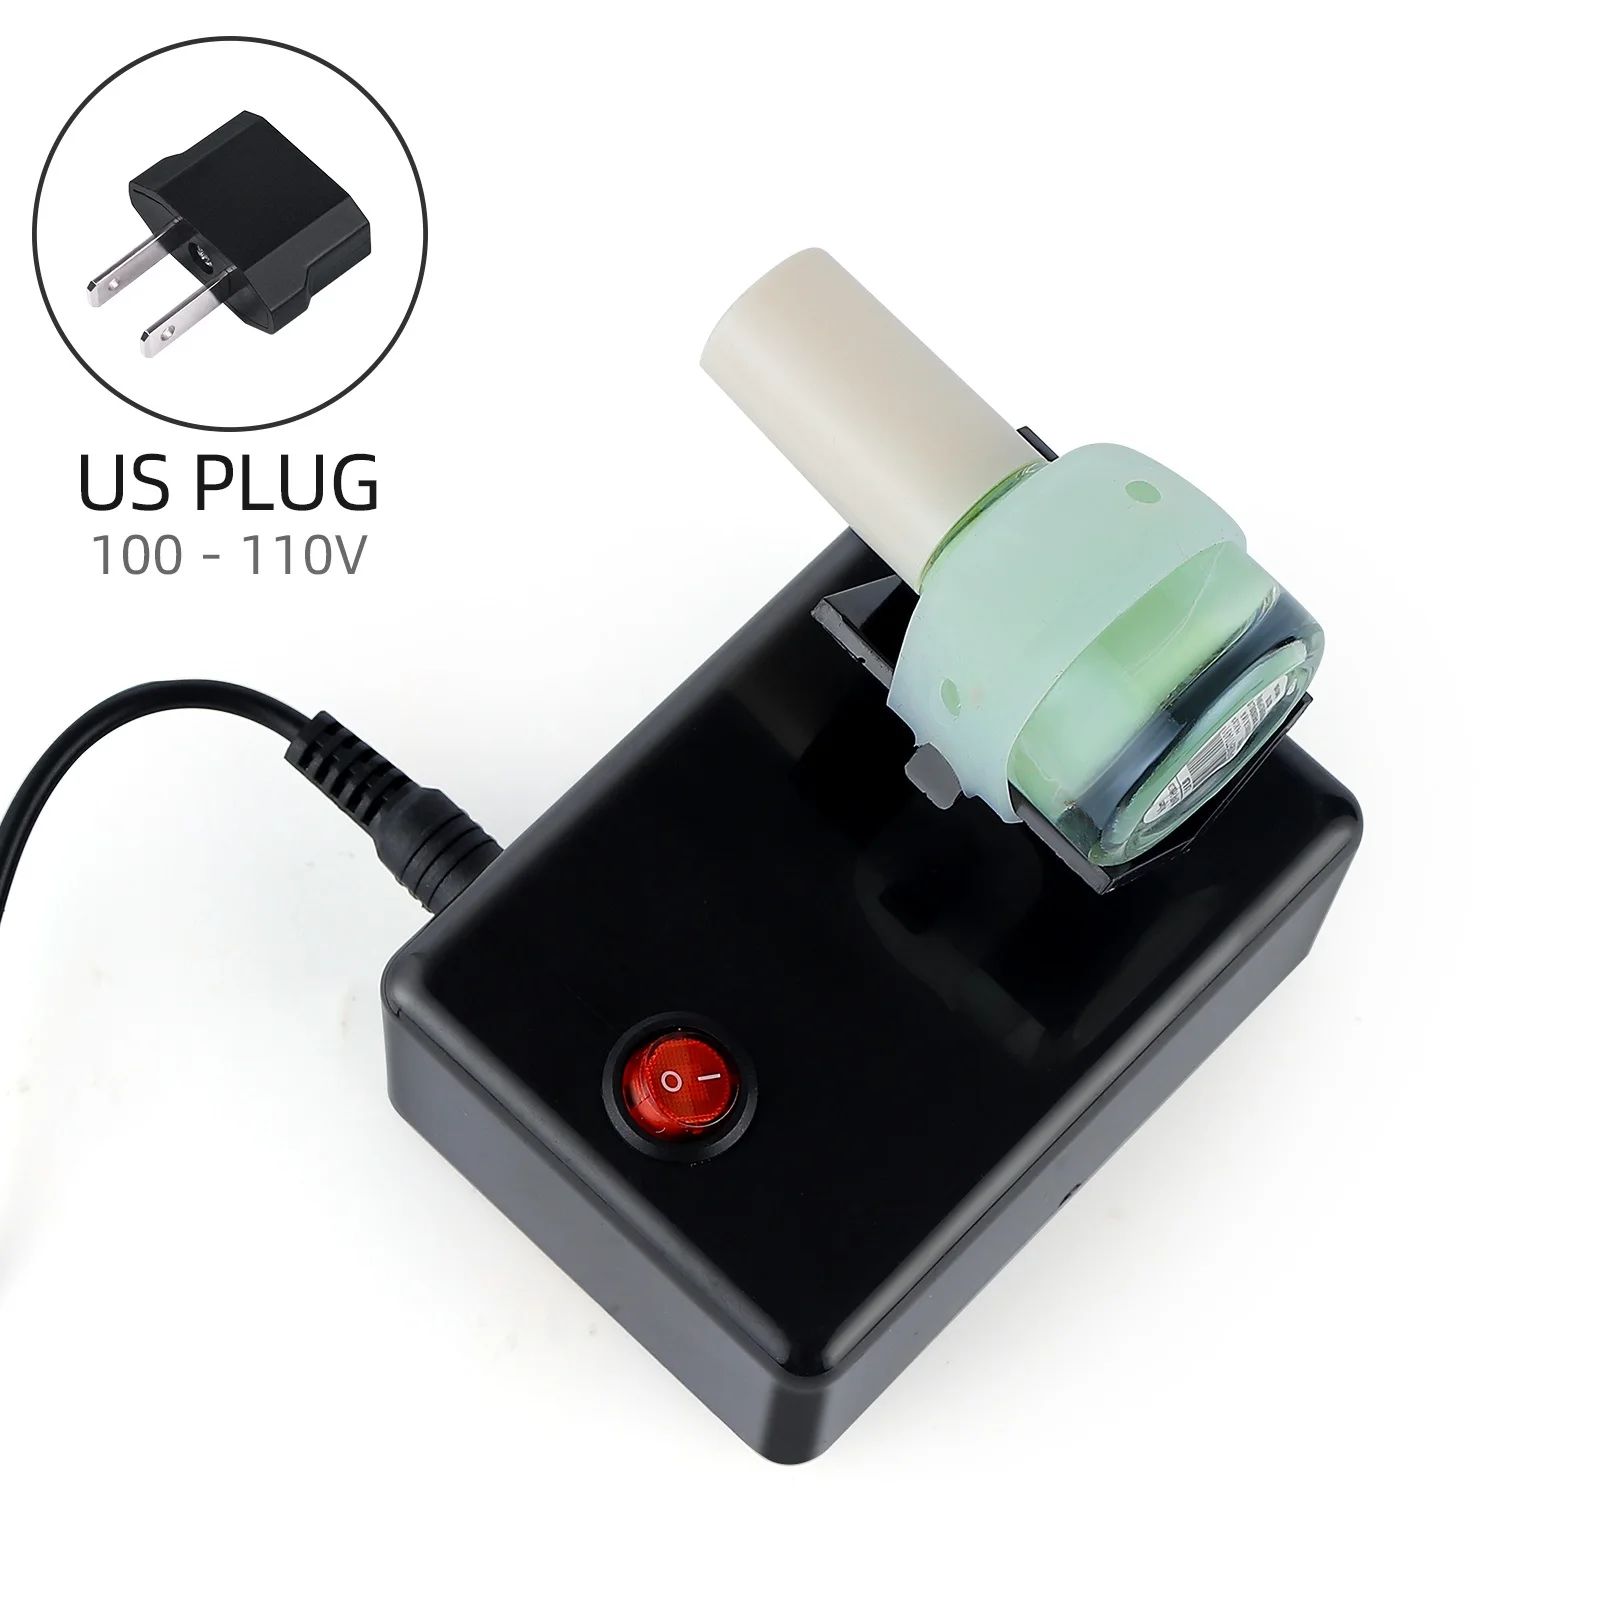 Cor: EUA plug 100-110V